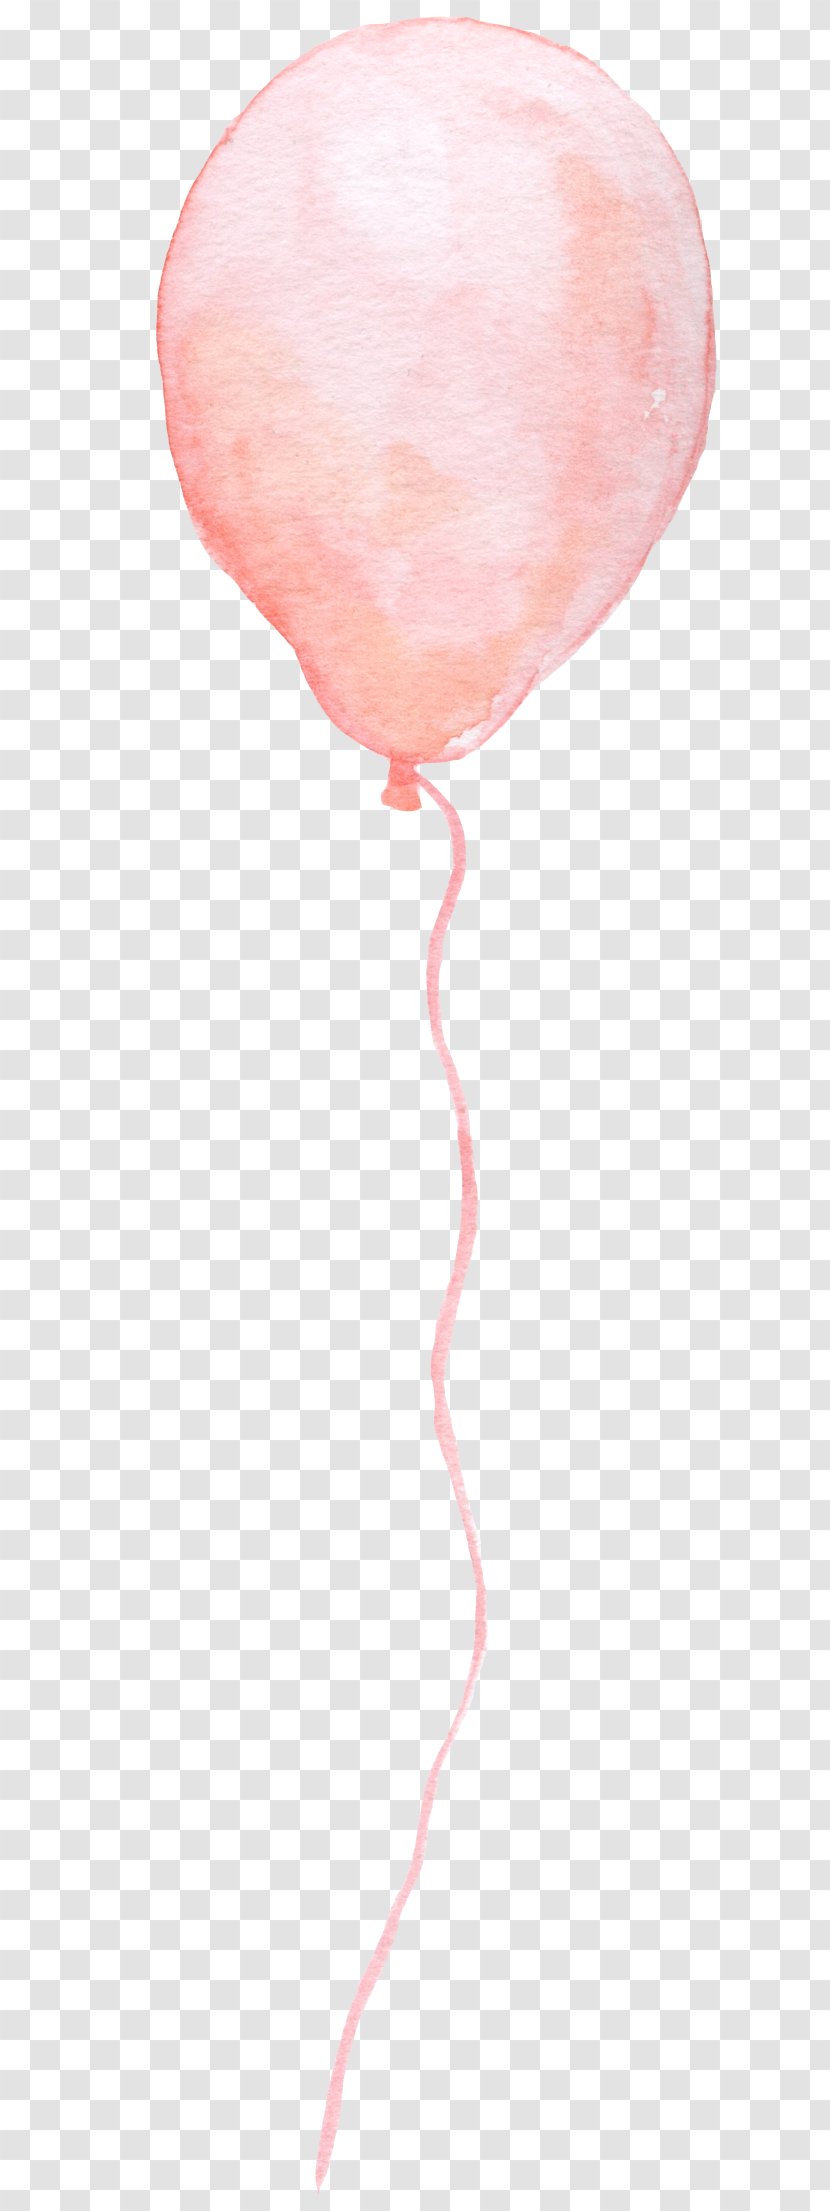 Google Images Clip Art - Pink Balloons Transparent PNG